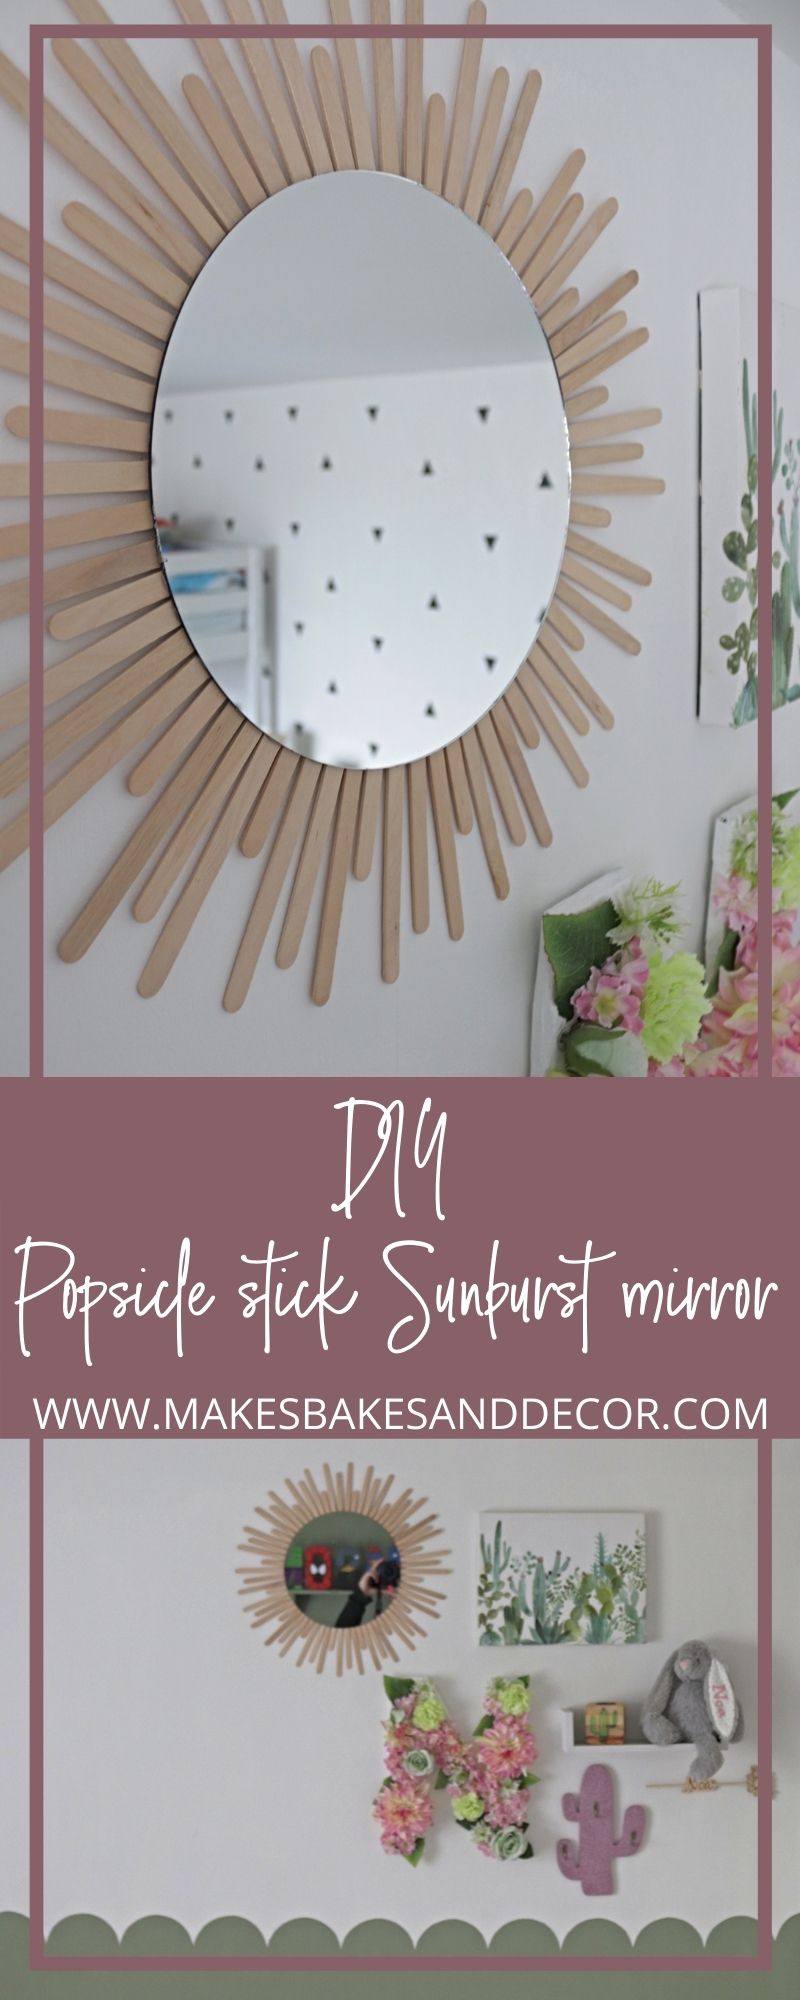 DIY-Popsicle-stick-Sunburst-mirror-PIN - Makes, Bakes and Decor